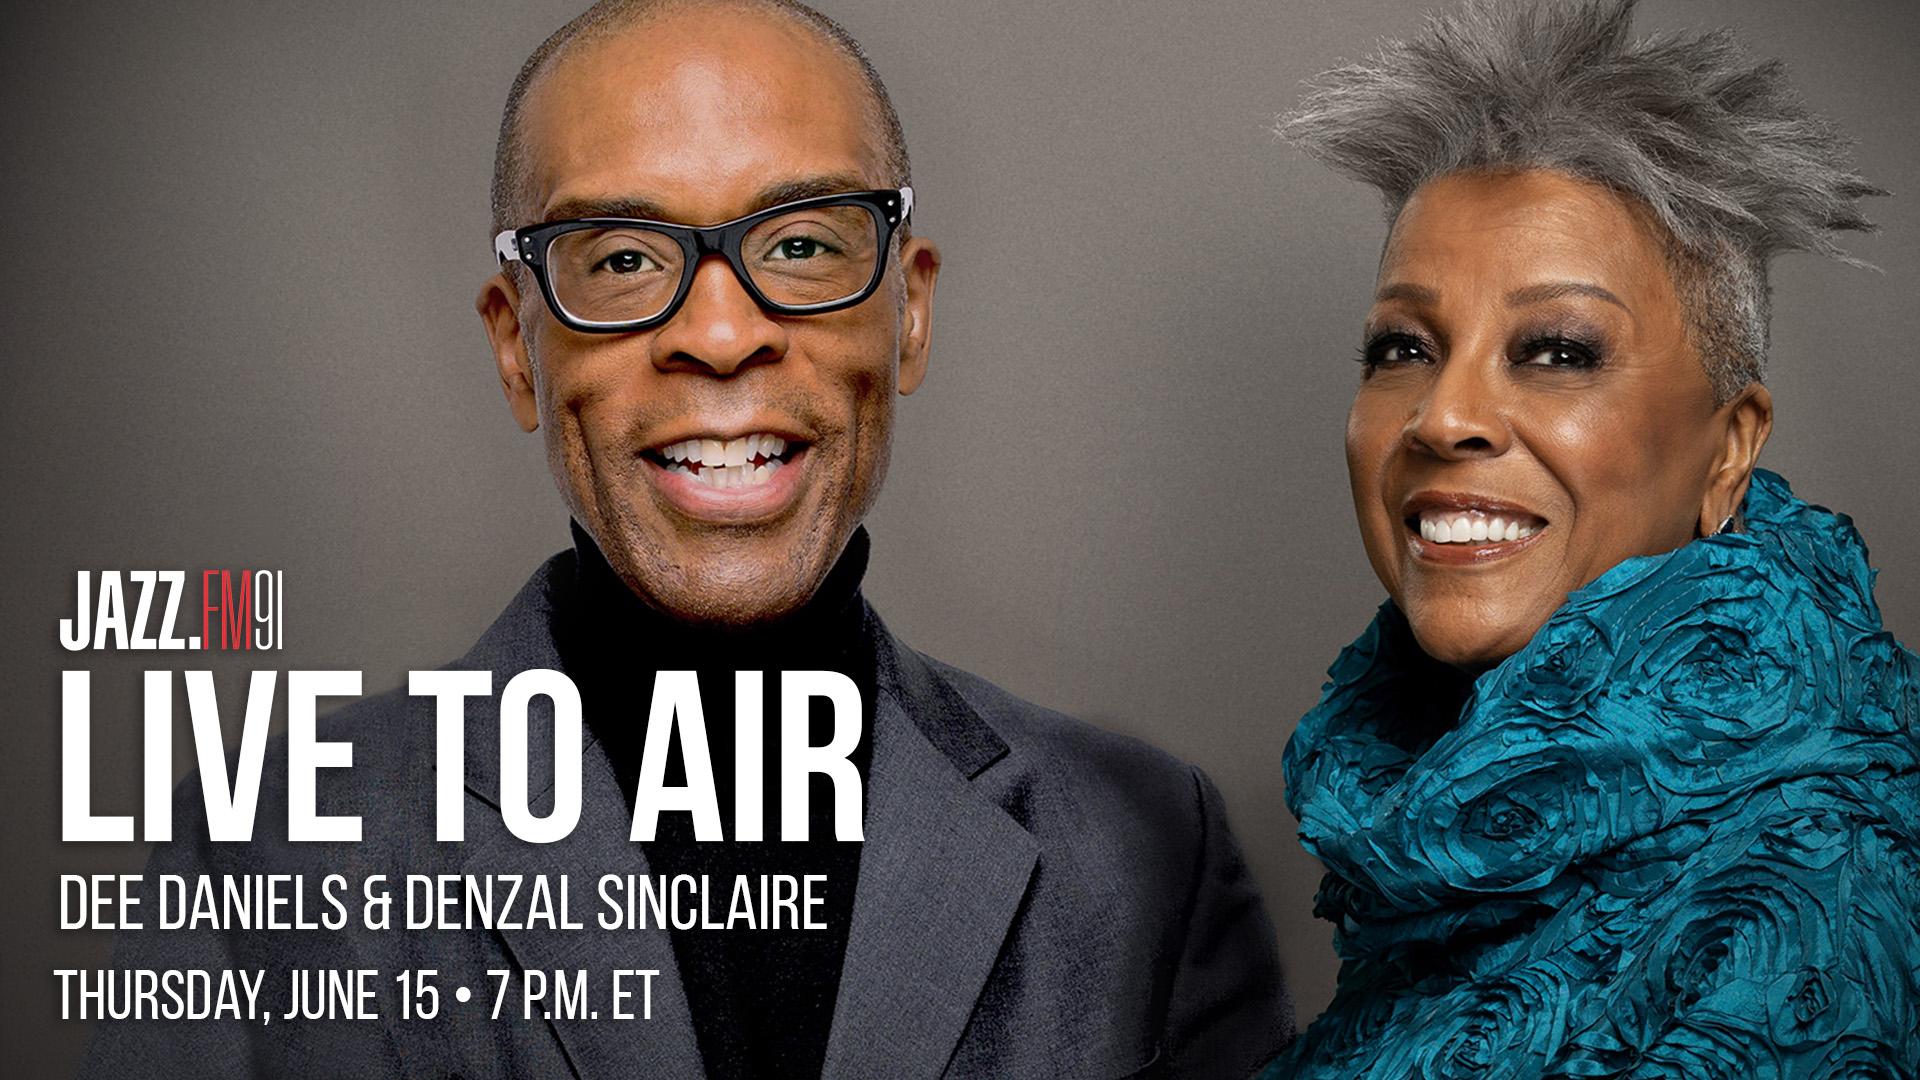 Live to Air: Dee Daniels & Denzal Sinclaire